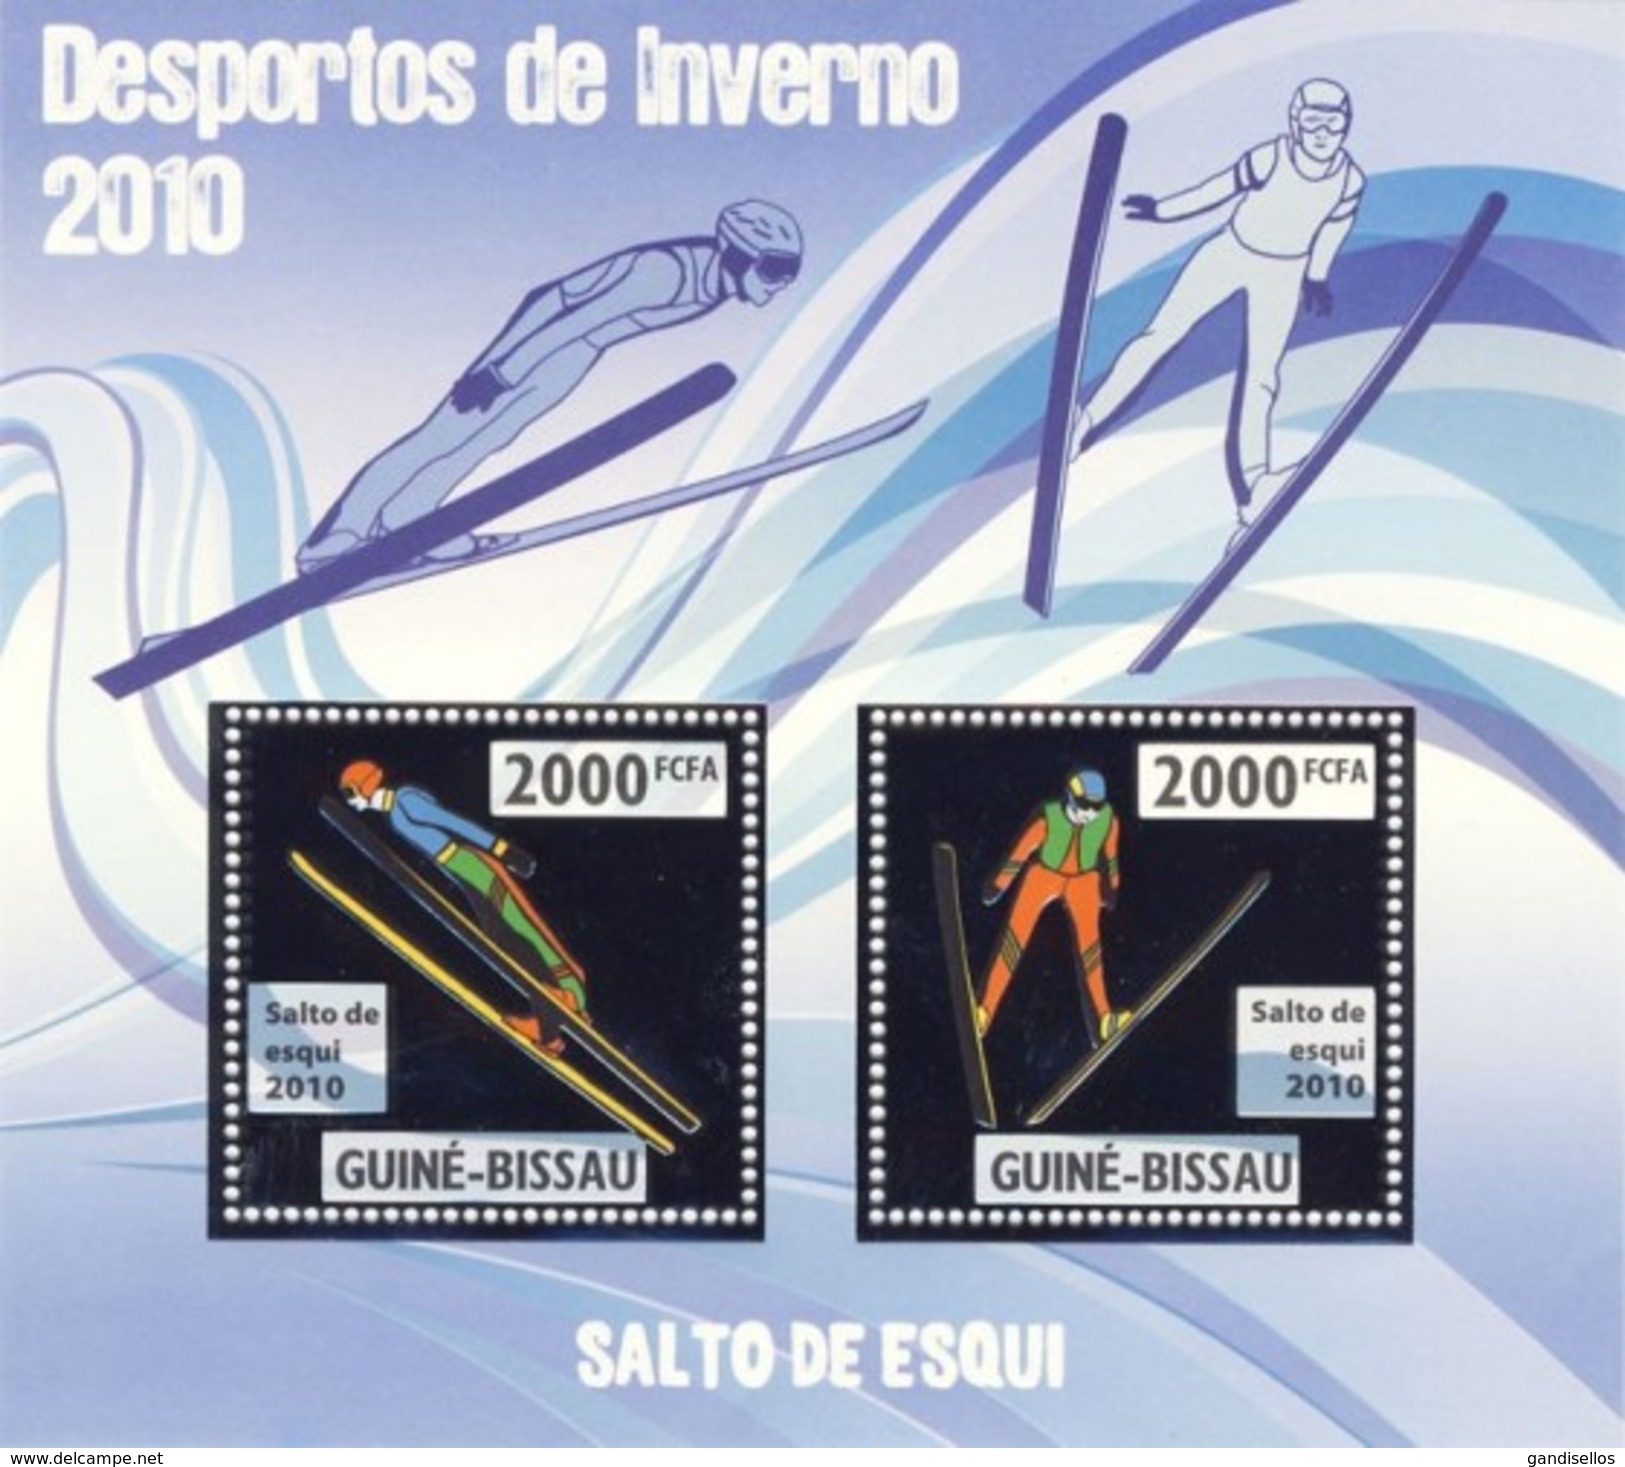 GUINE BISSAU 2010 SHEET WINTER SPORTS OLYMPIC GAMES JEUX DE HIVER SKY JUMPING DESPORTOS Gb10201a Silver - Guinea-Bissau